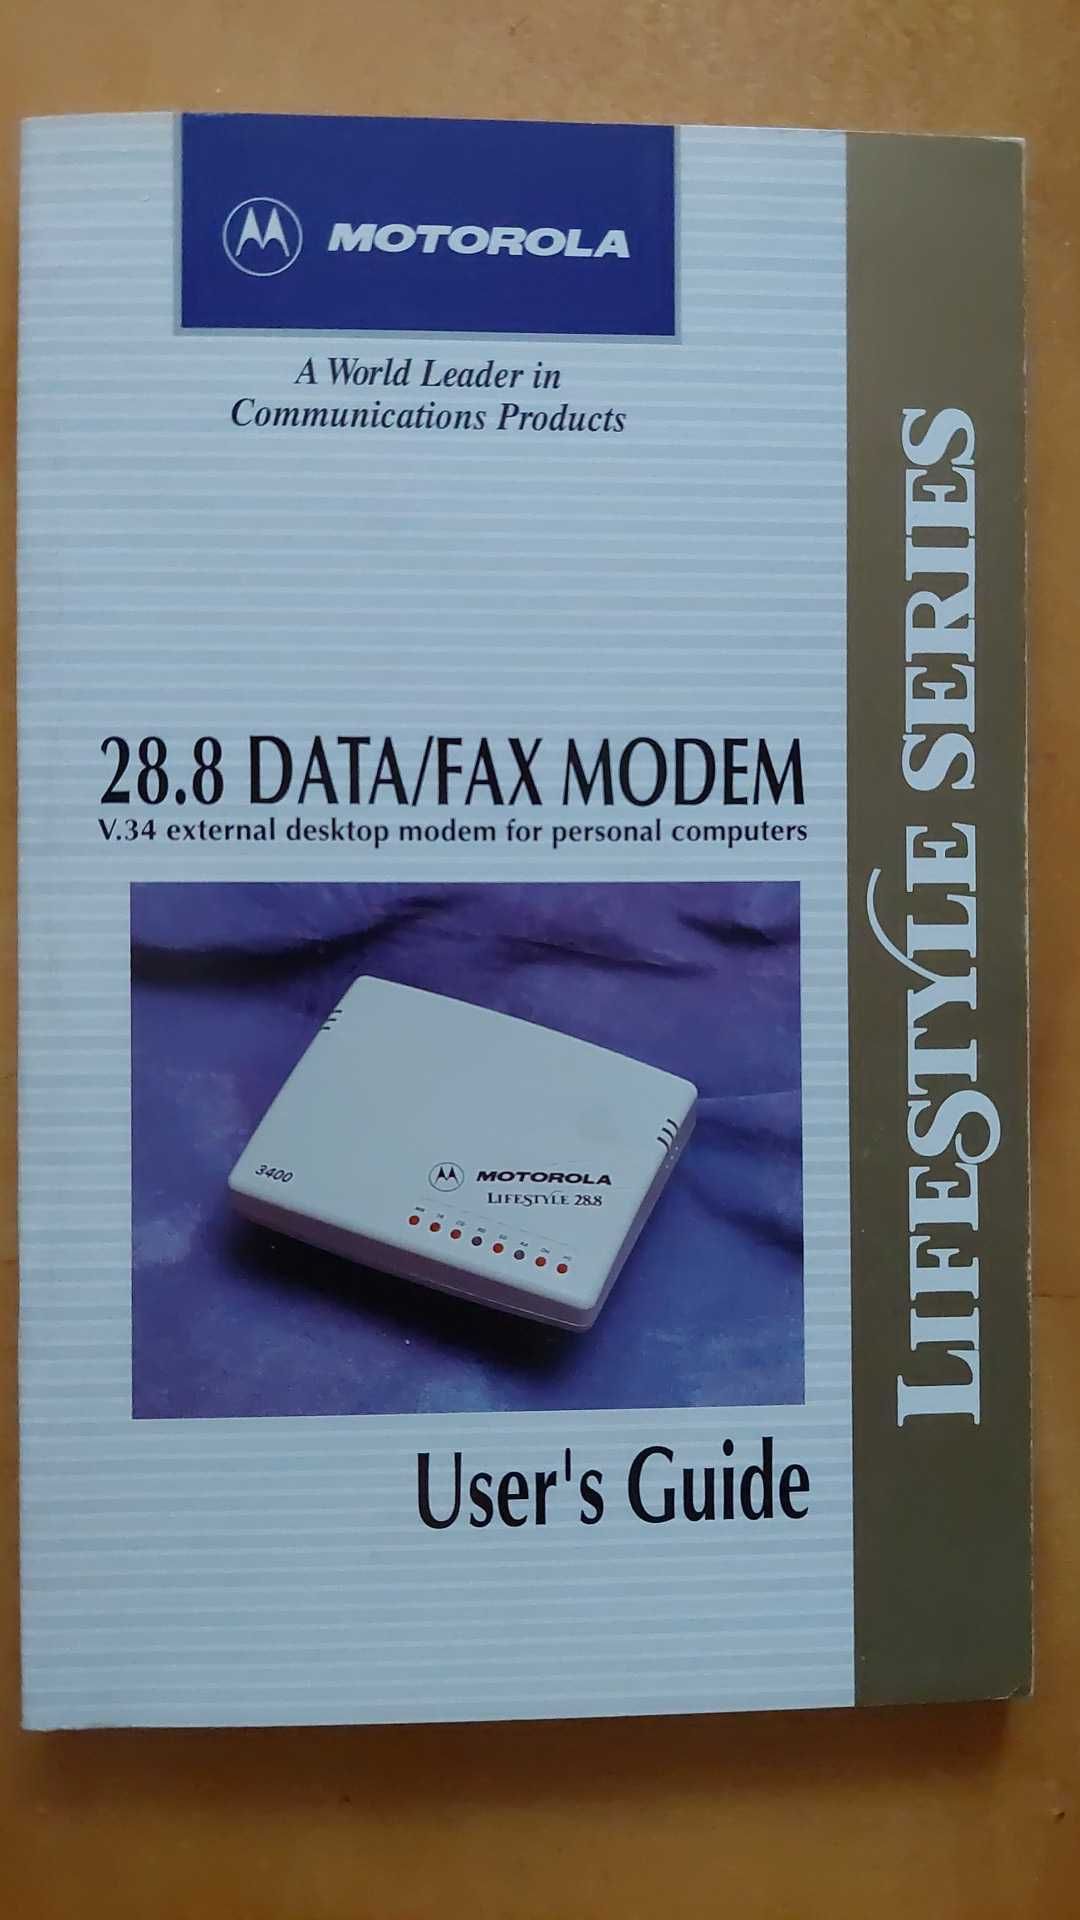 LifeStyle 28.8 Data / Fax Modem Motorola